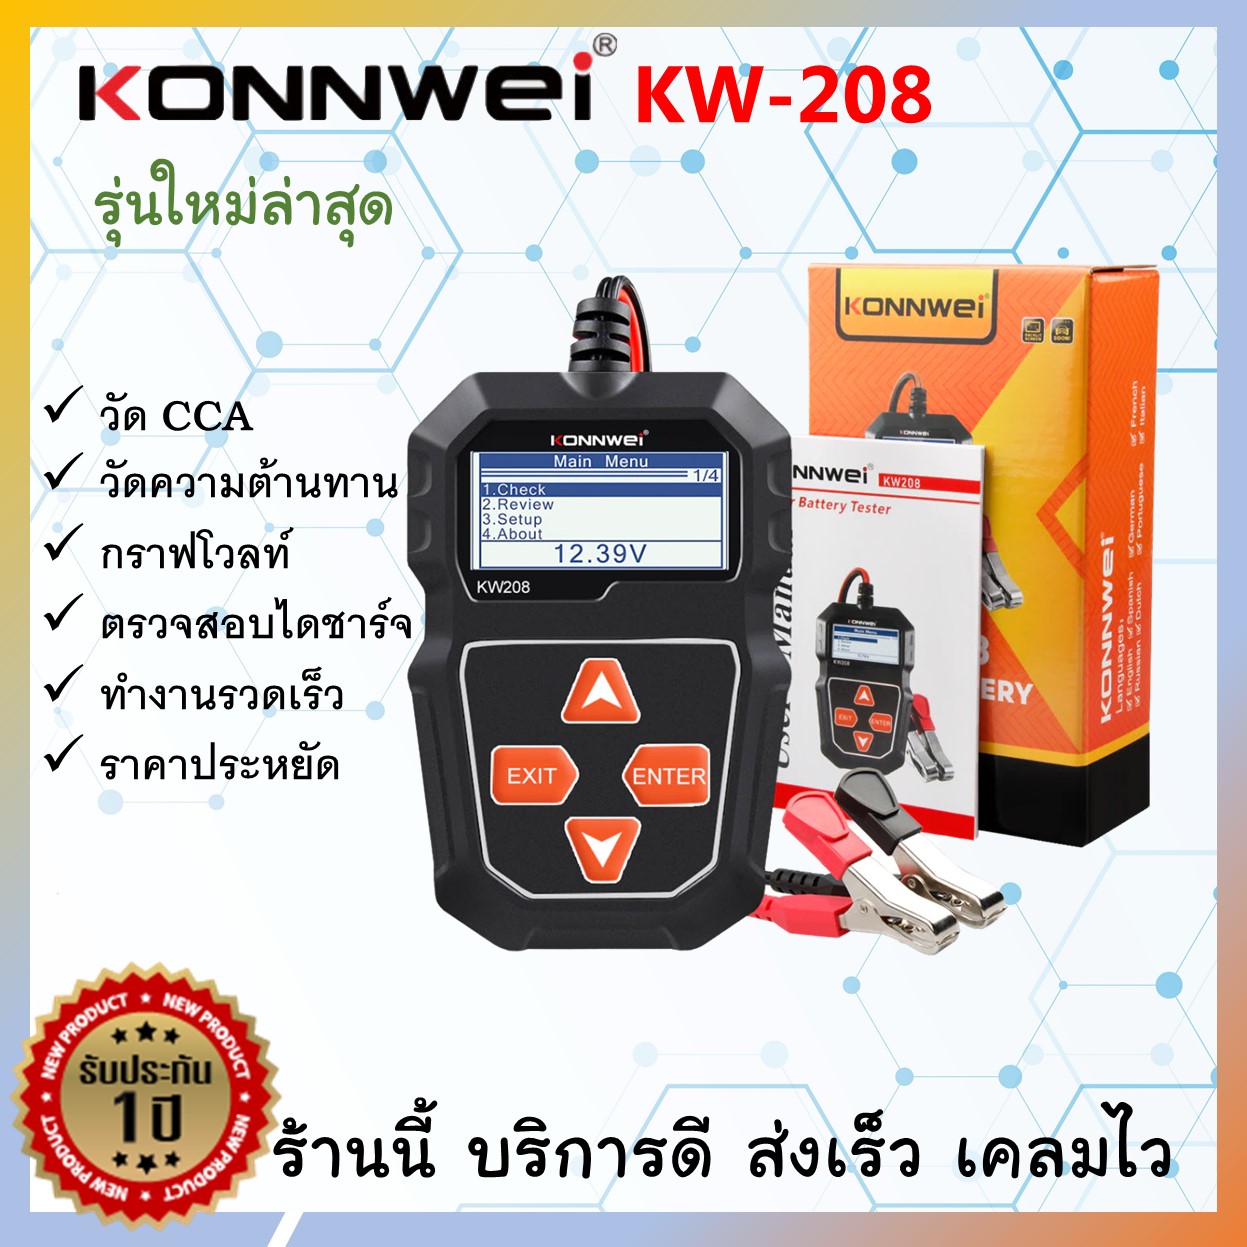 Konnwei KW208 เครื่องวัดCCA แบตเตอรี่ ราคาประหยัด ฟังค์ชั่นครบ ประกัน 1ปี คุณภาพดีกว่า Micro200 Pro